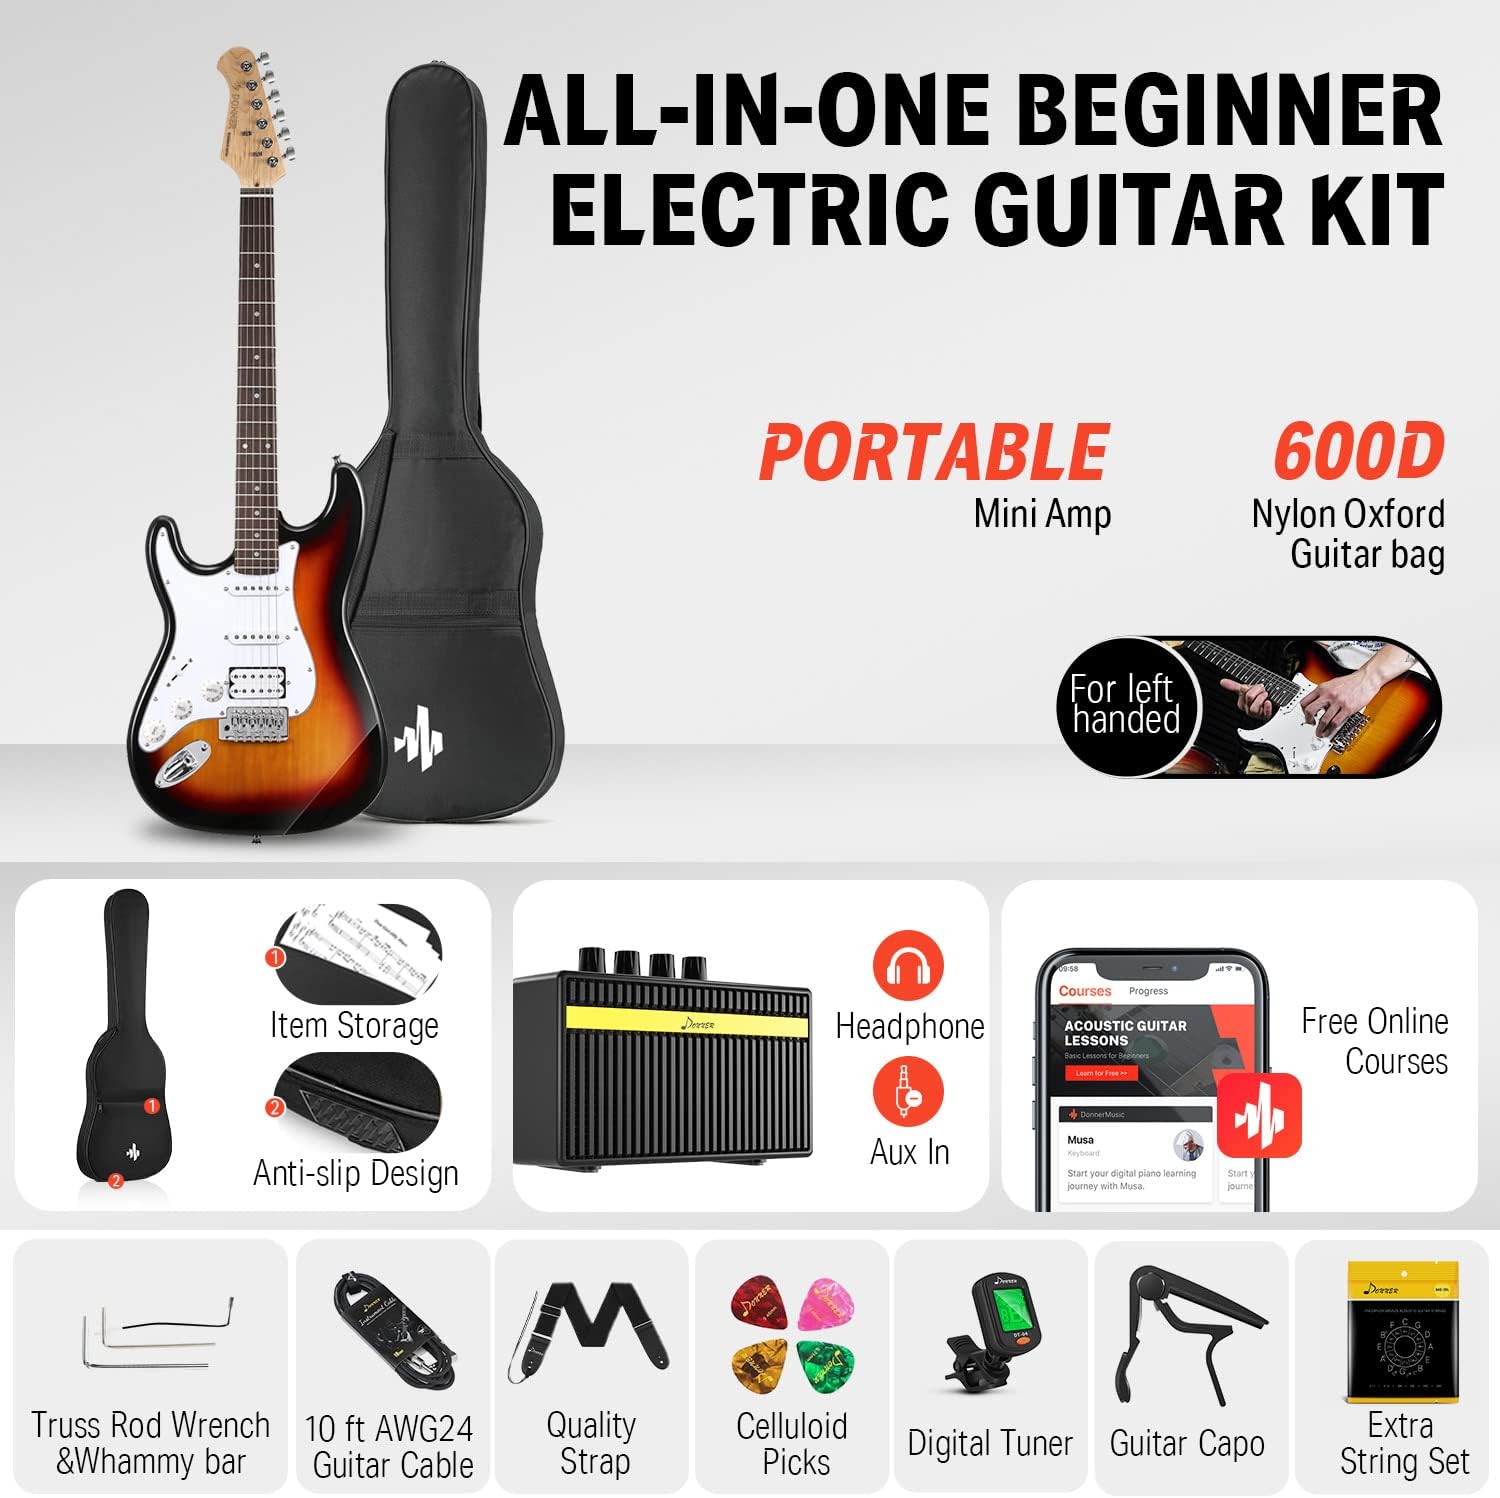 Donner DST-100SL Guitar Kit Review